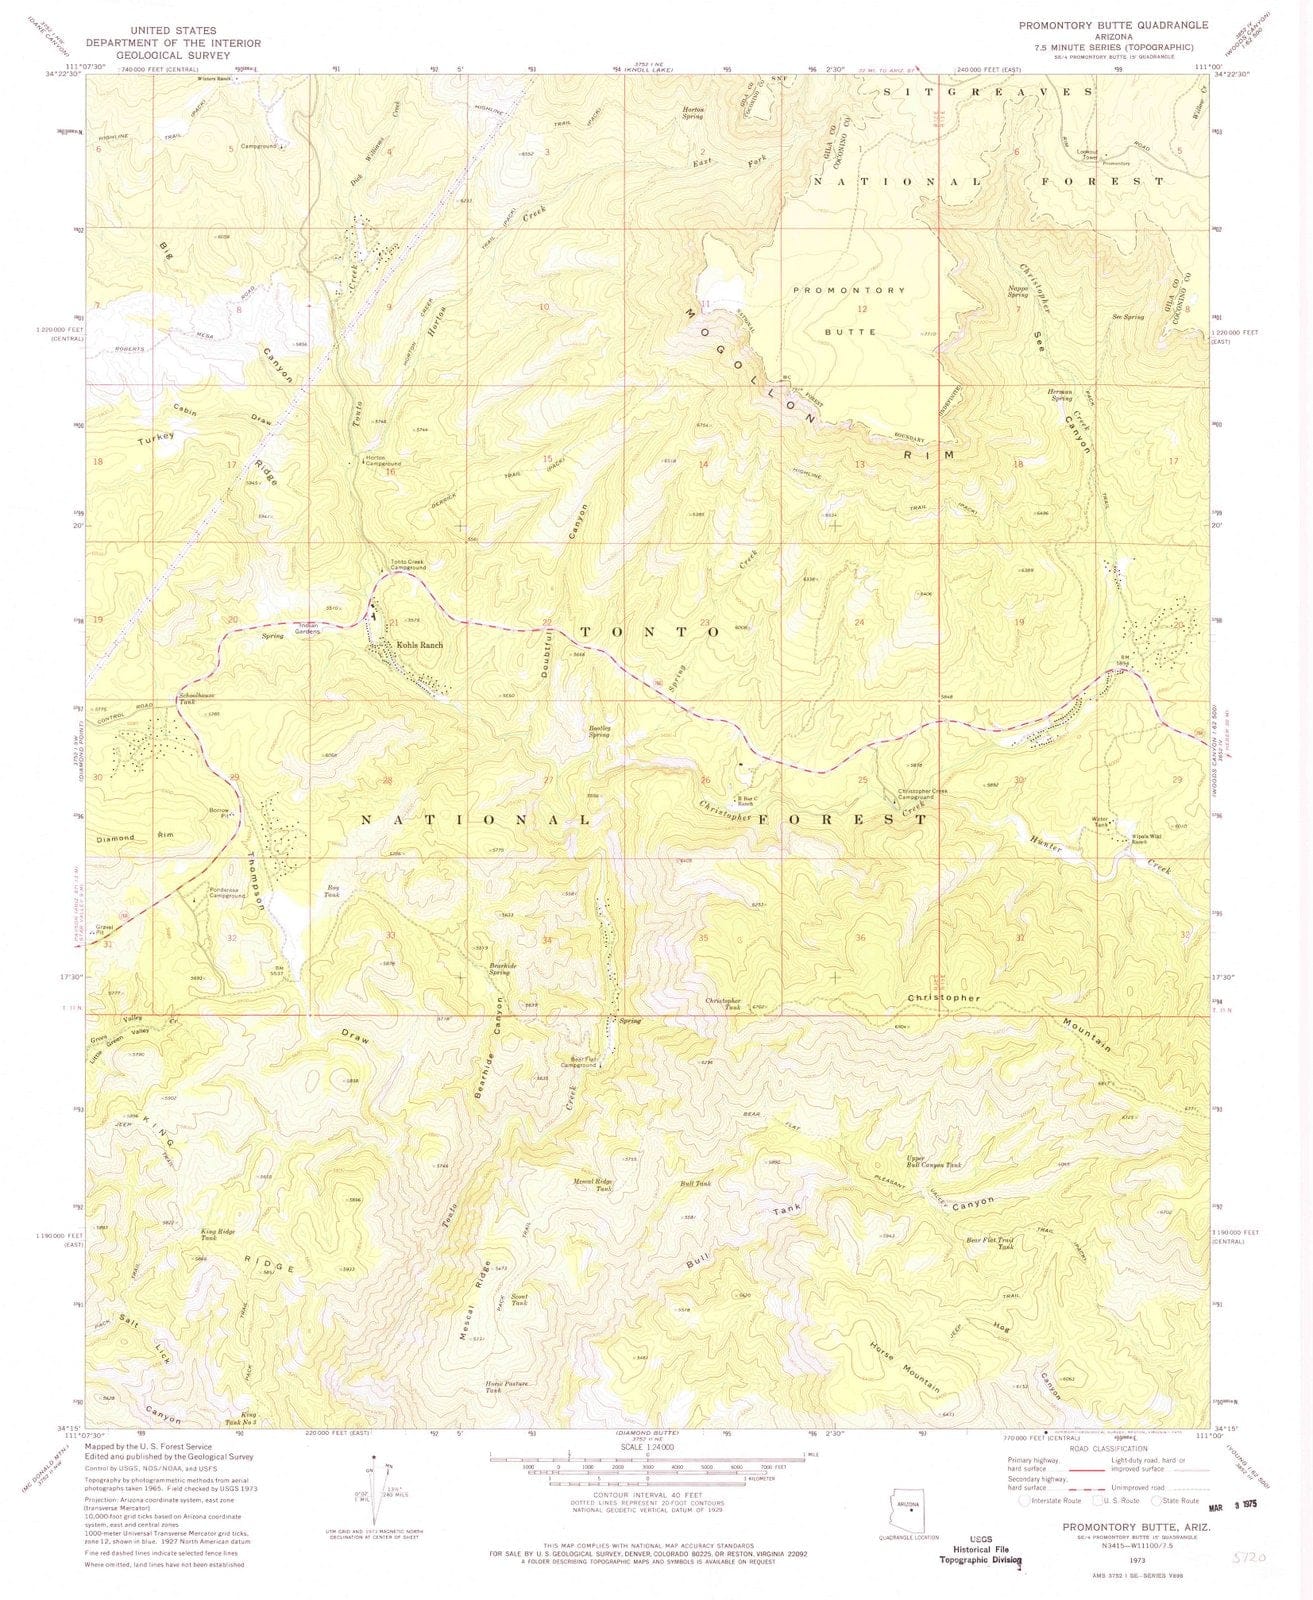 1973 Promontory Butte, AZ - Arizona - USGS Topographic Map